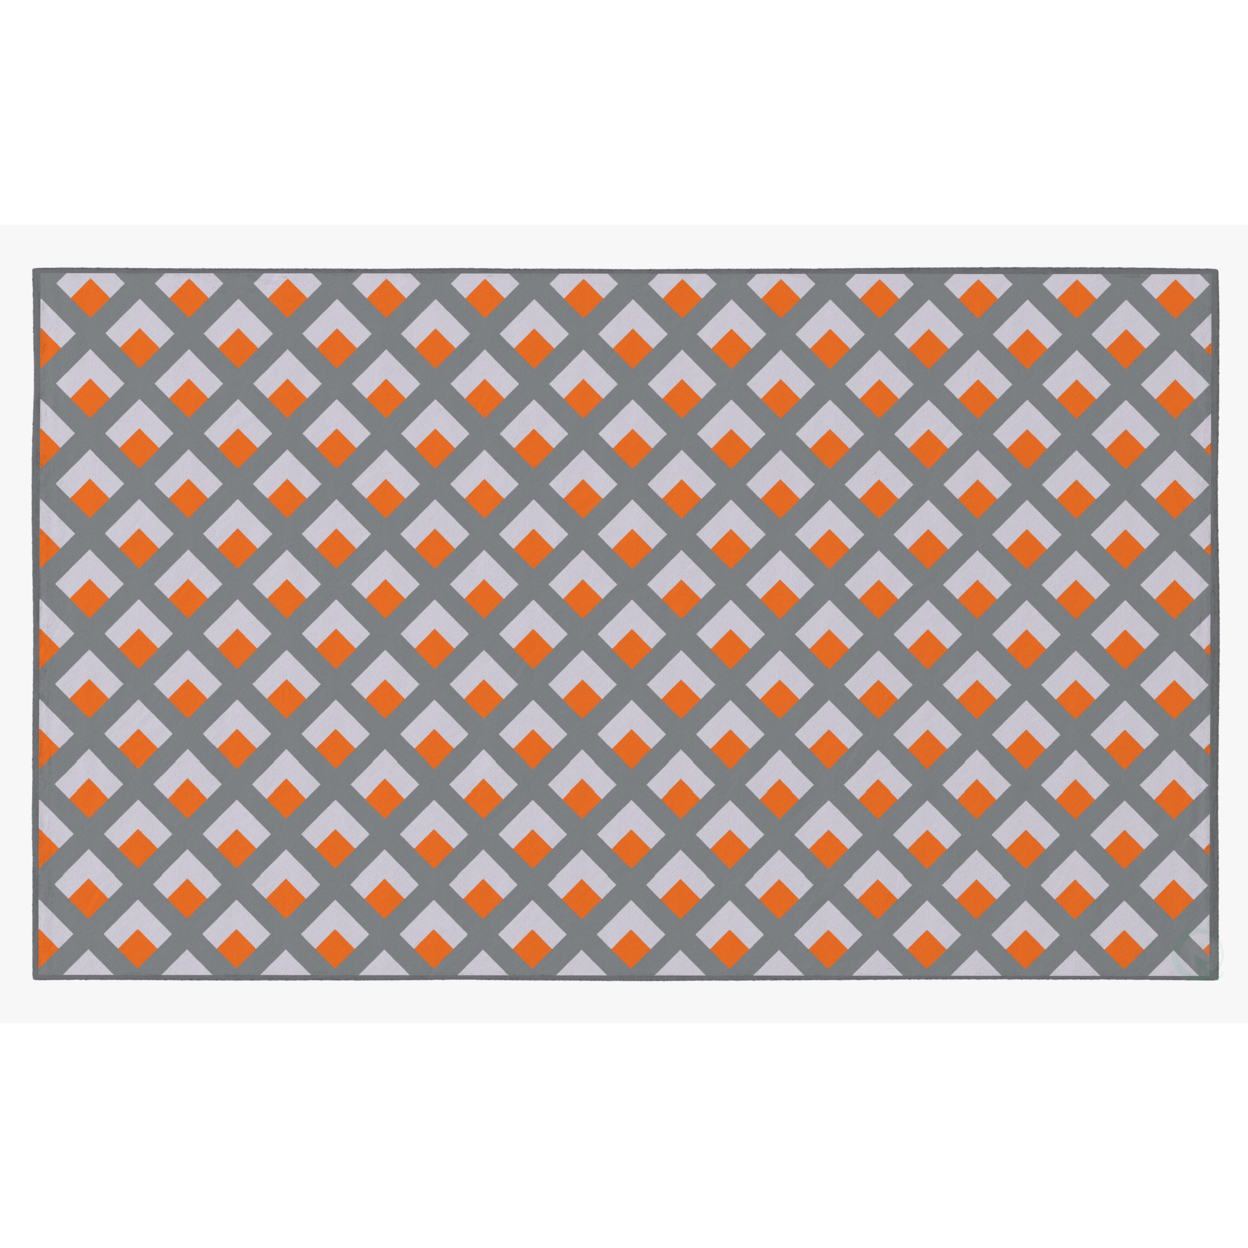 Deerlux Modern Living Room Area Rug With Nonslip Backing, Geometric Gray And Orange Trellis Pattern - 5 X 7